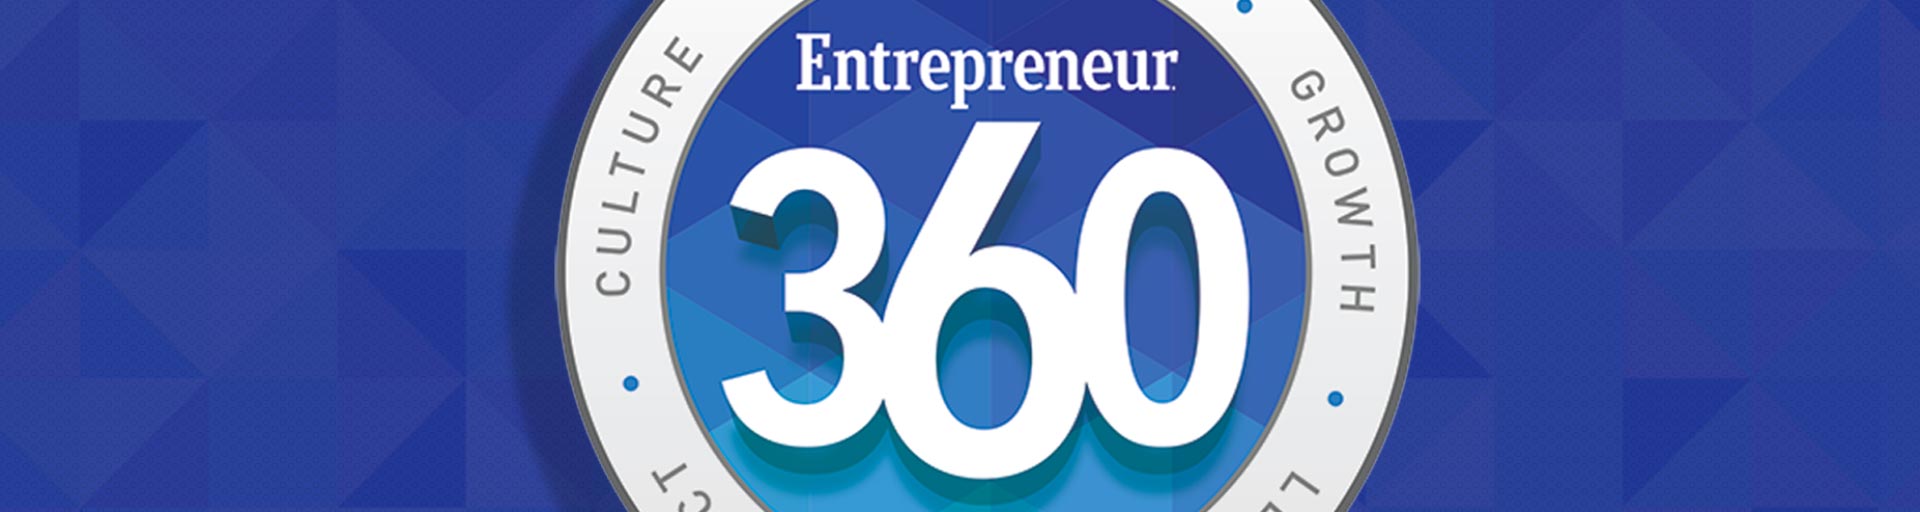 Entrepreneur 360™ honor